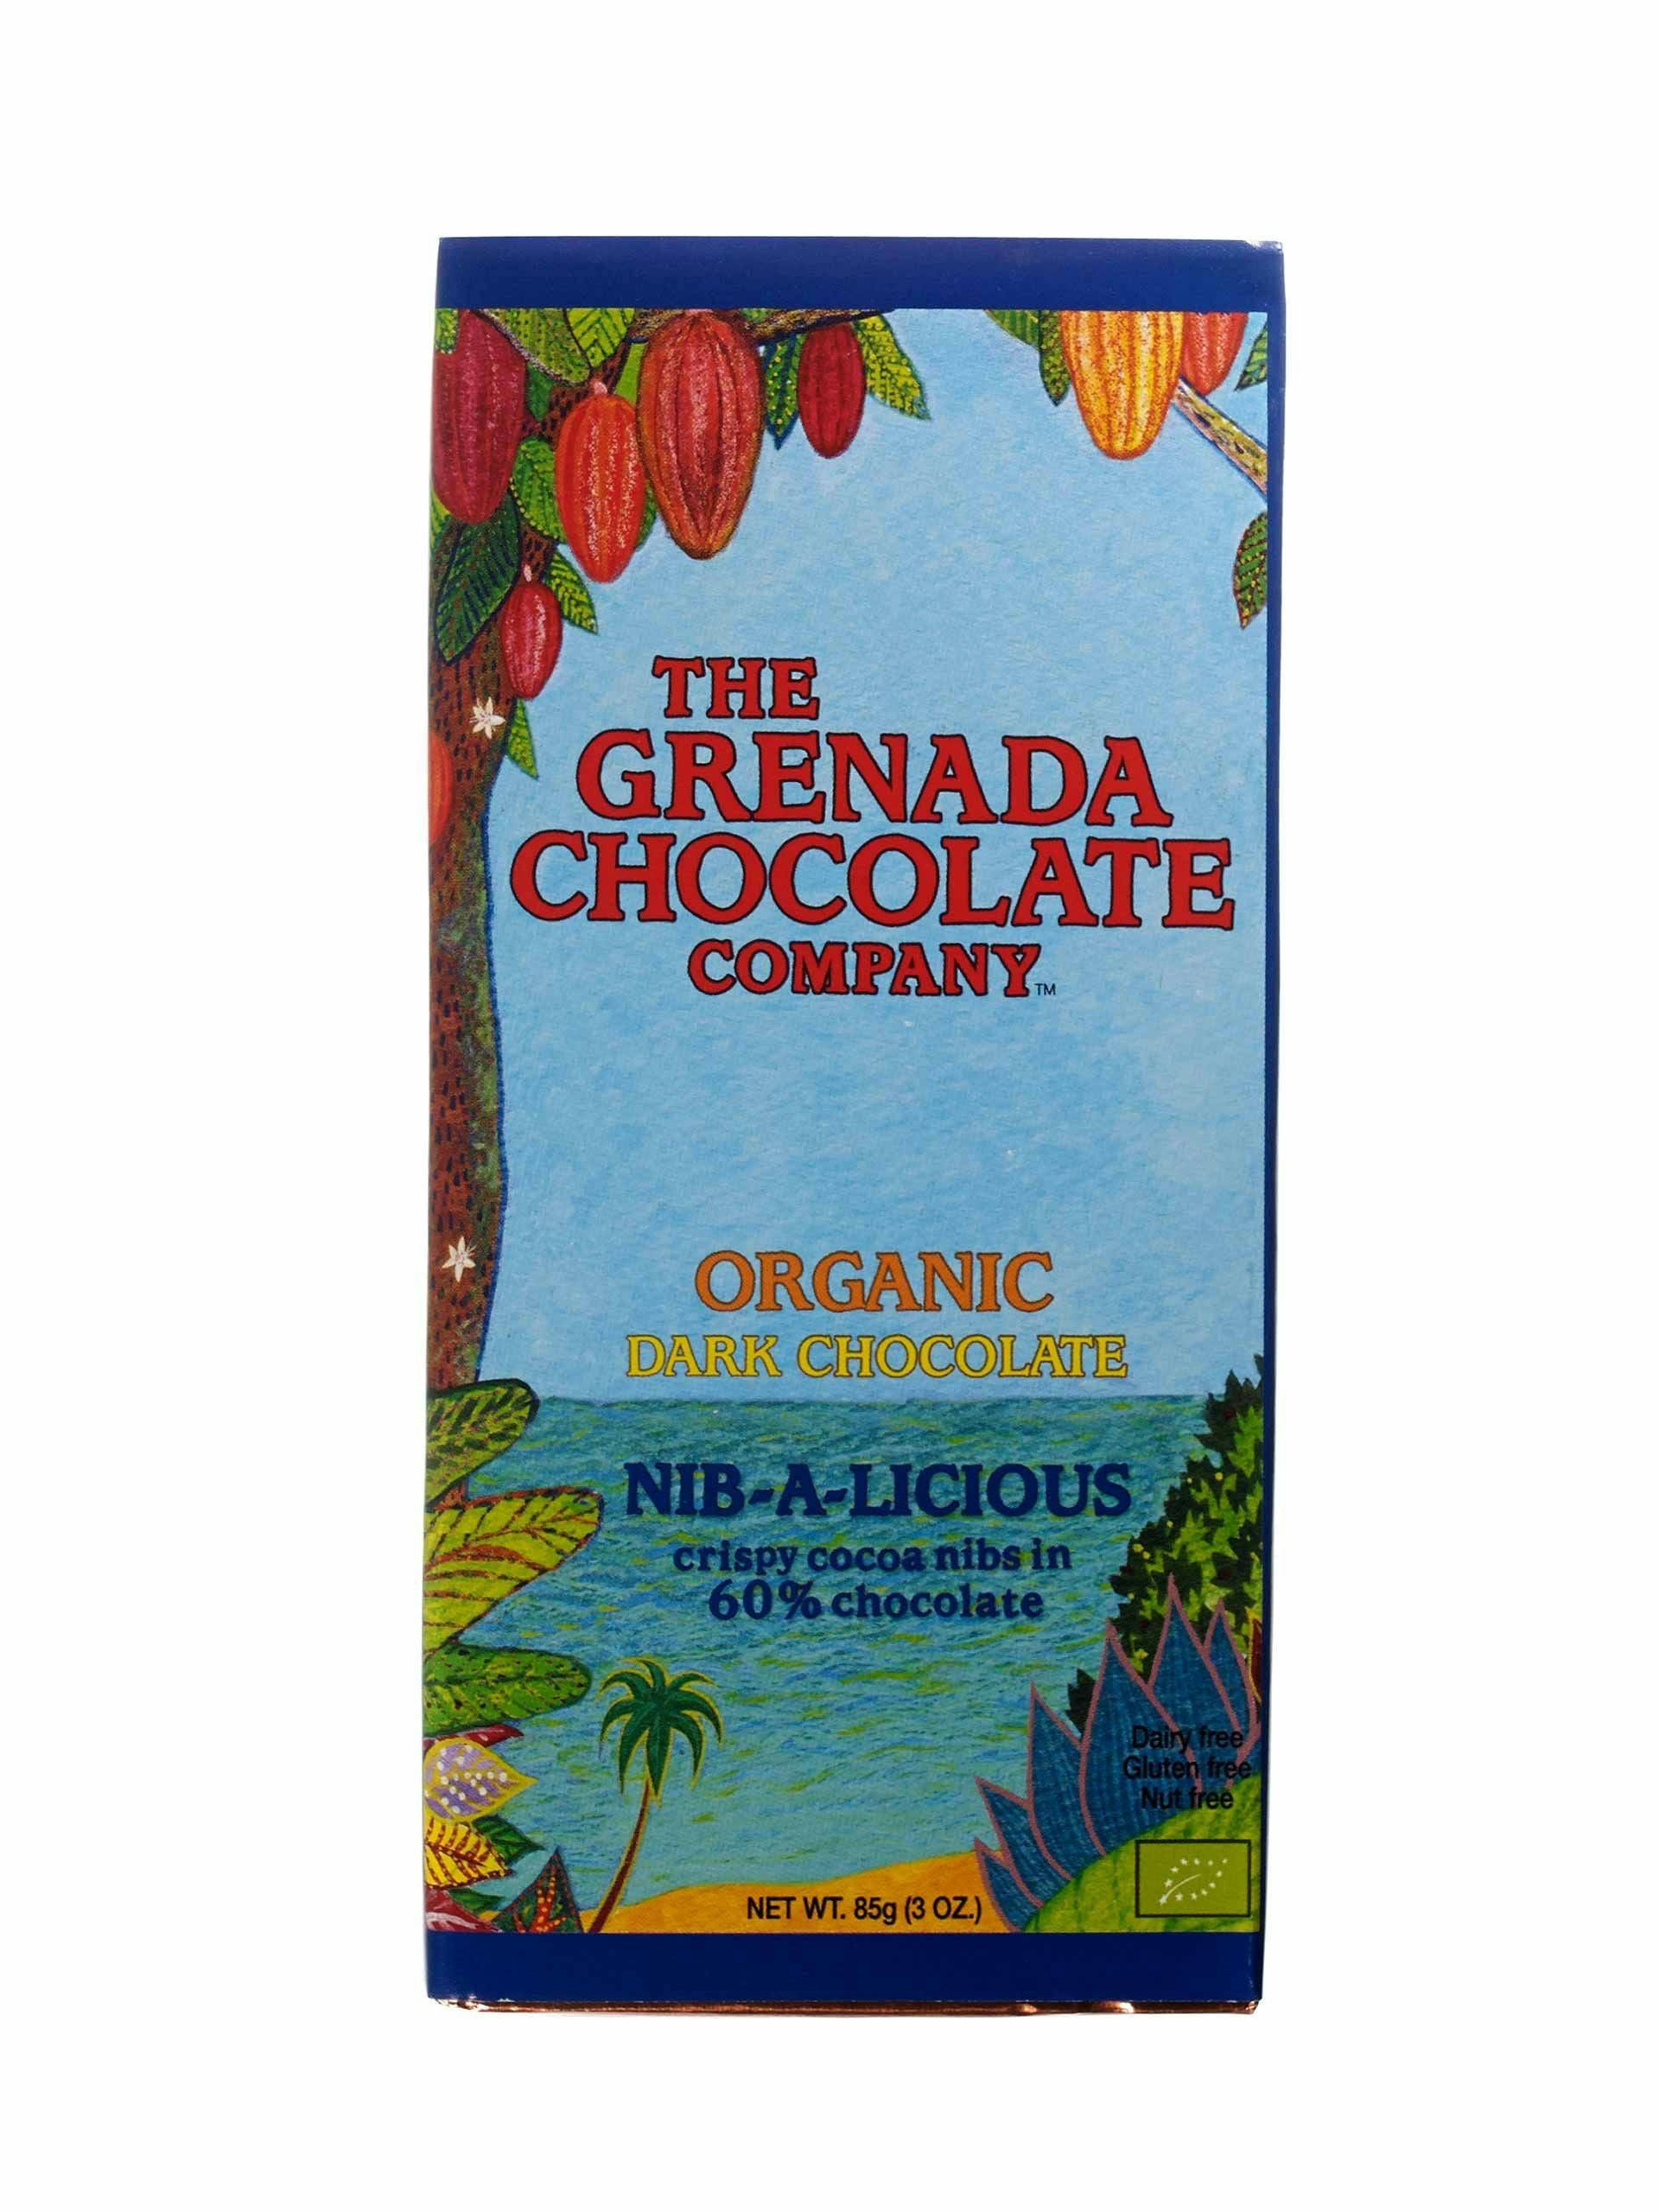 Organic dark chocolate bar